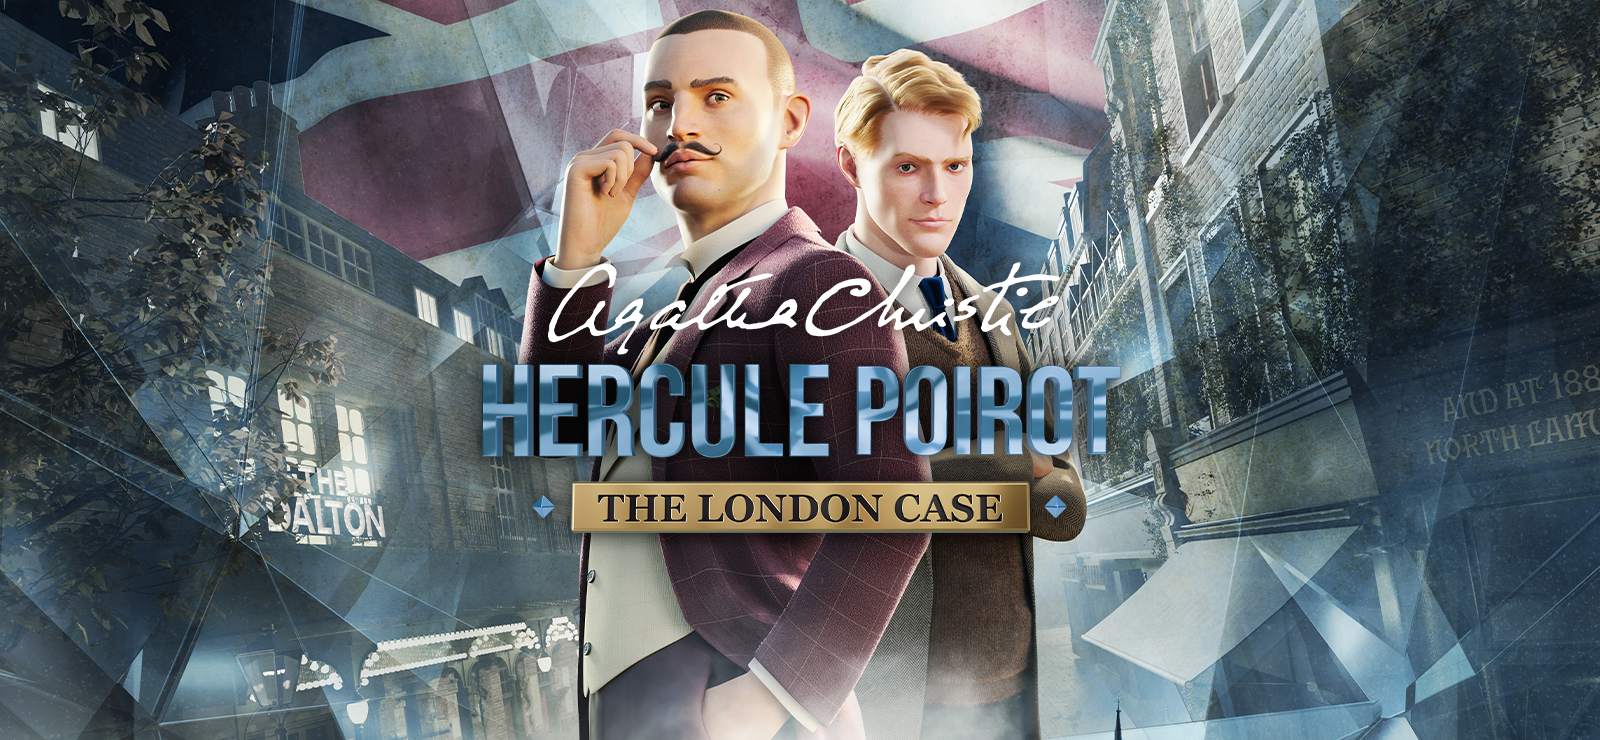 Agatha Christie - Hercule Poirot: The London Case - HD Digital Artbook